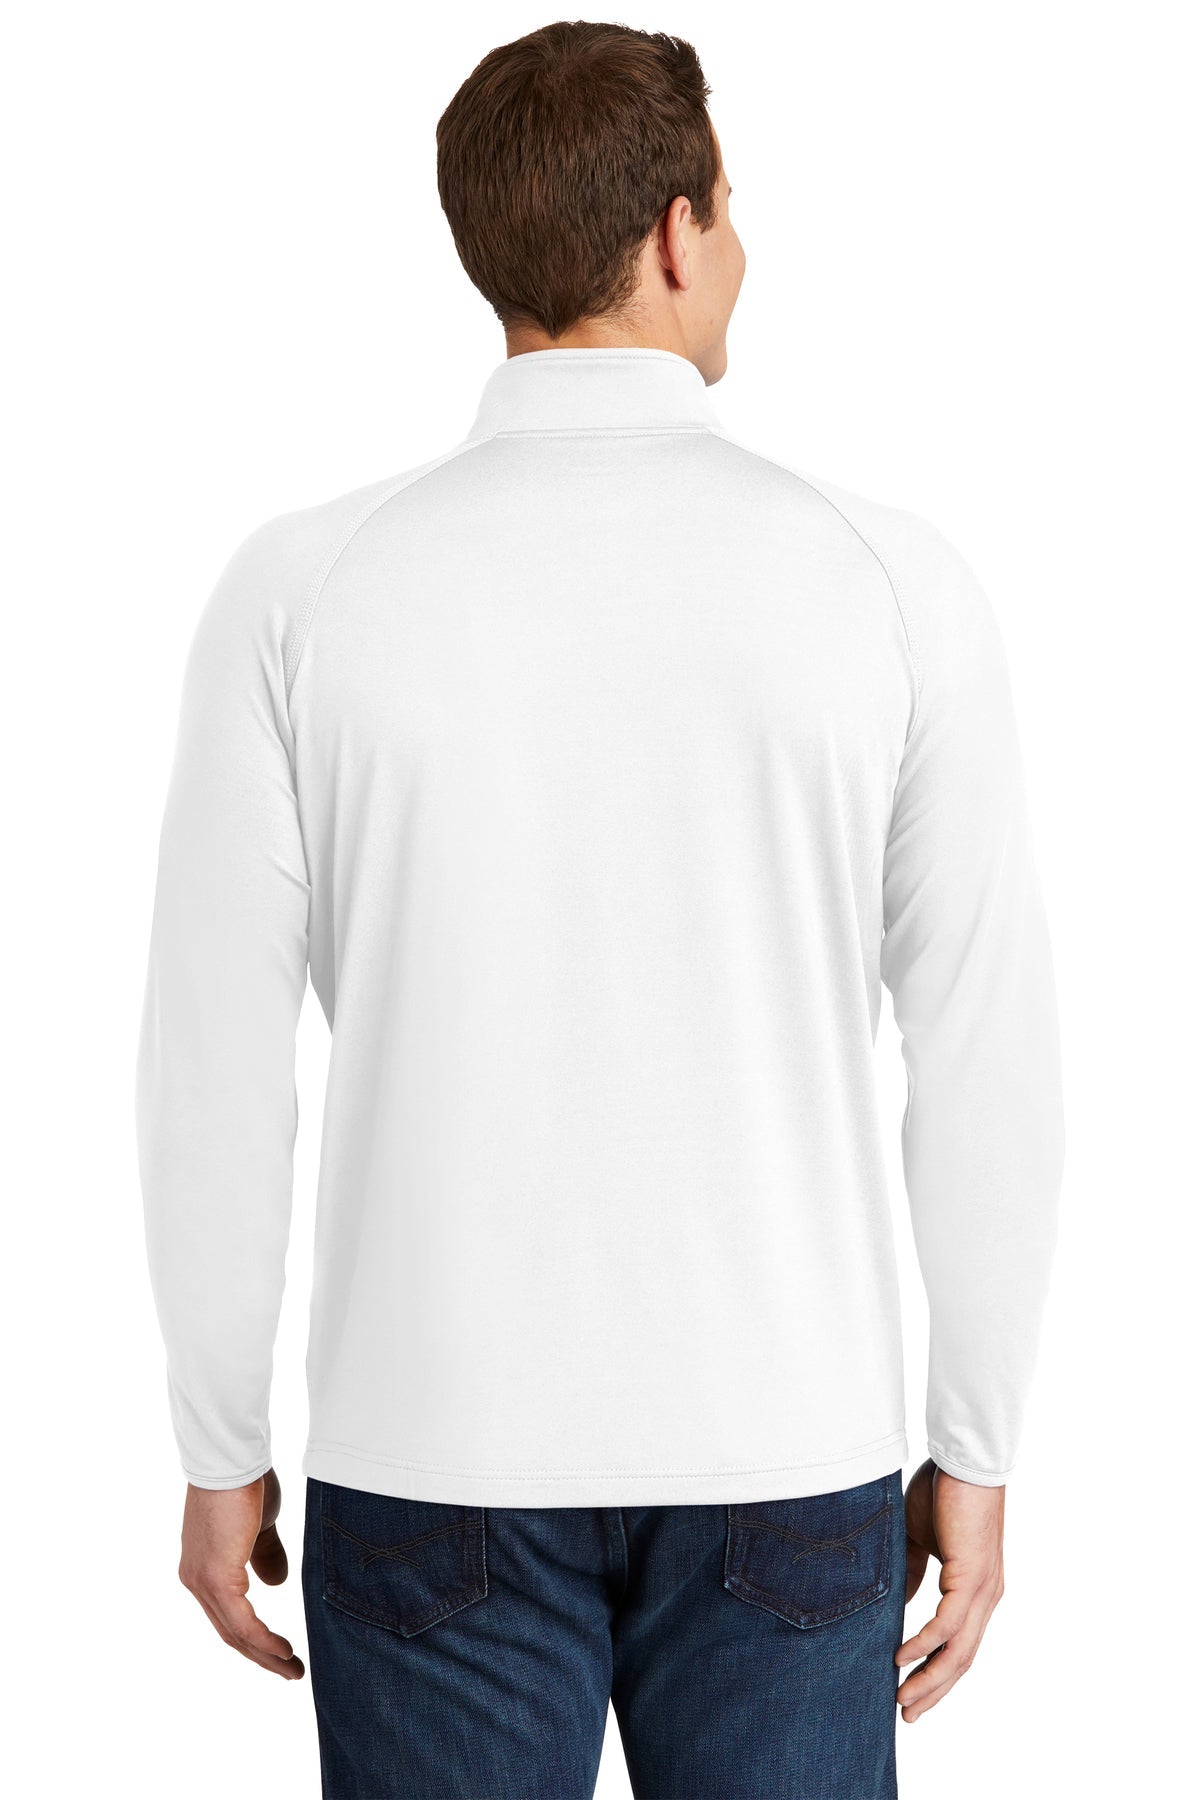 sport-tek_st850 _white_company_logo_sweatshirts